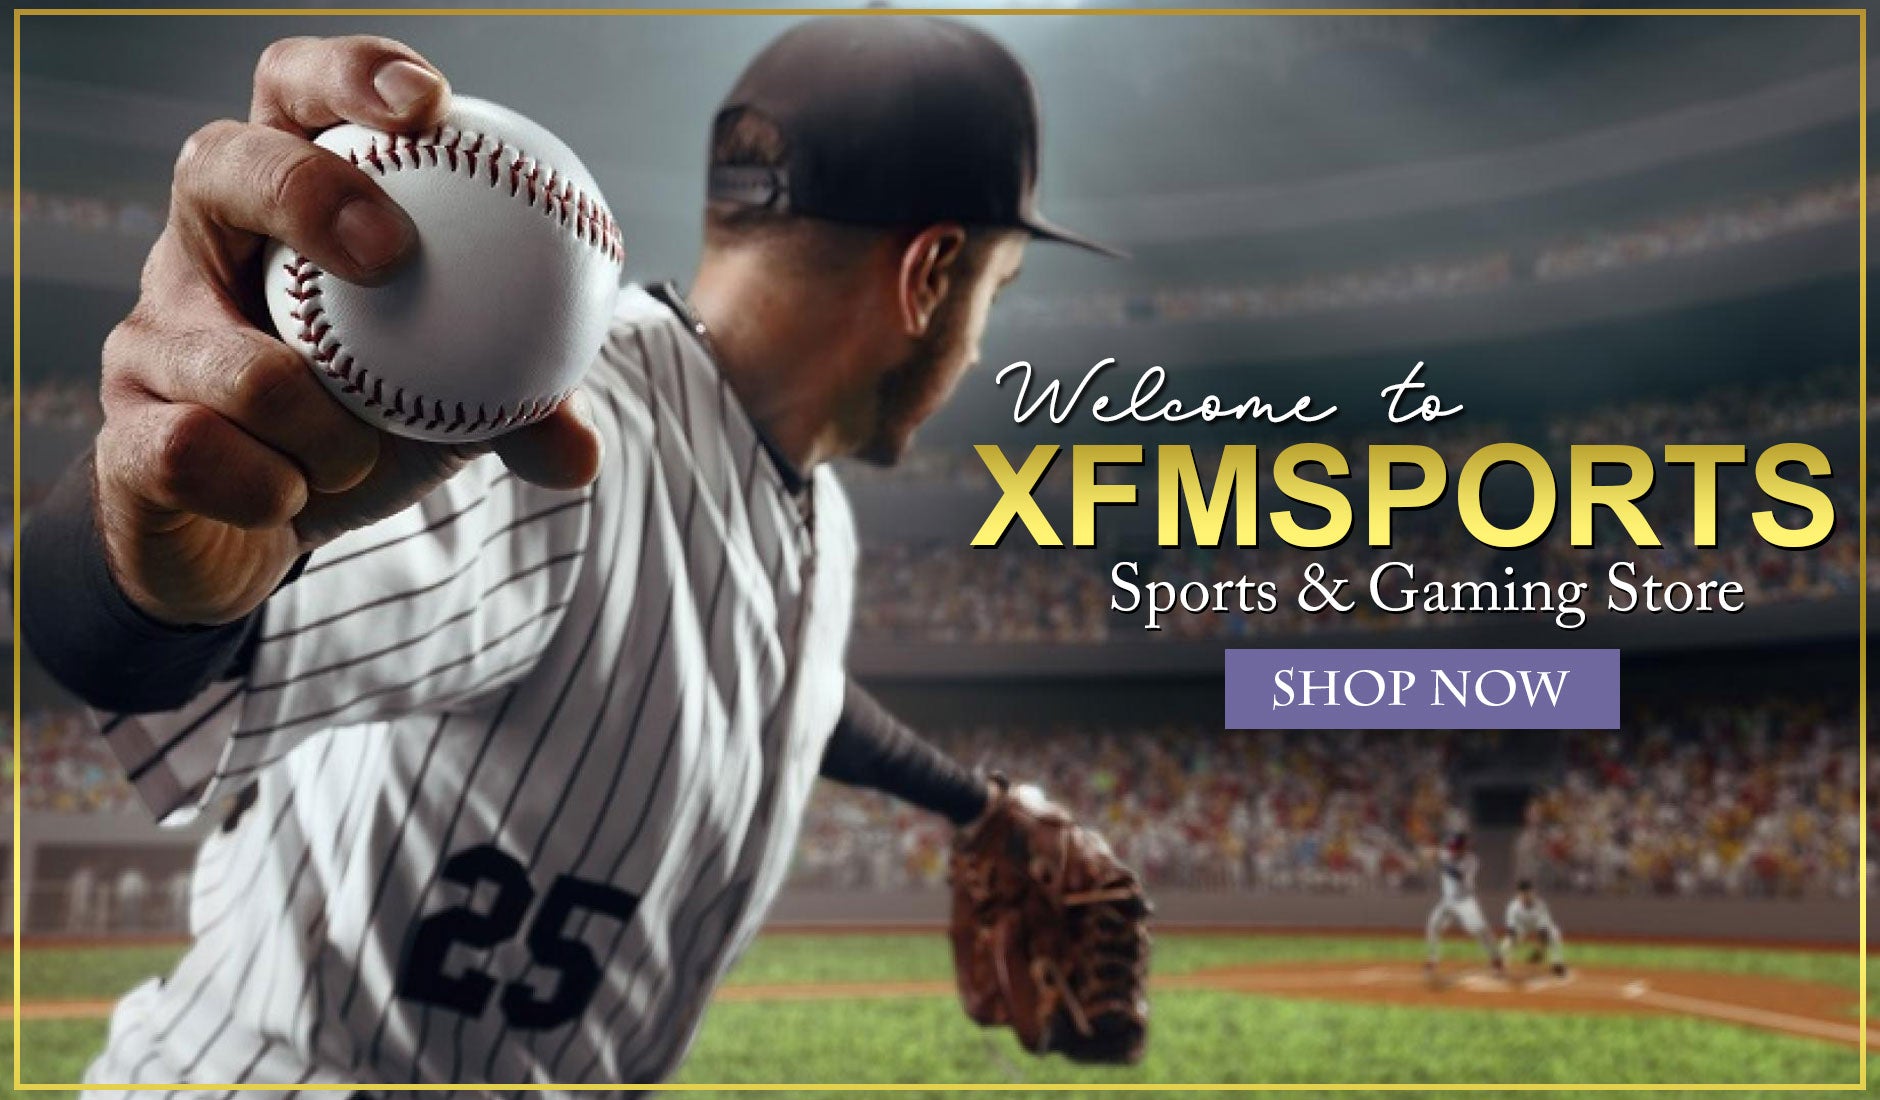 XFMSports